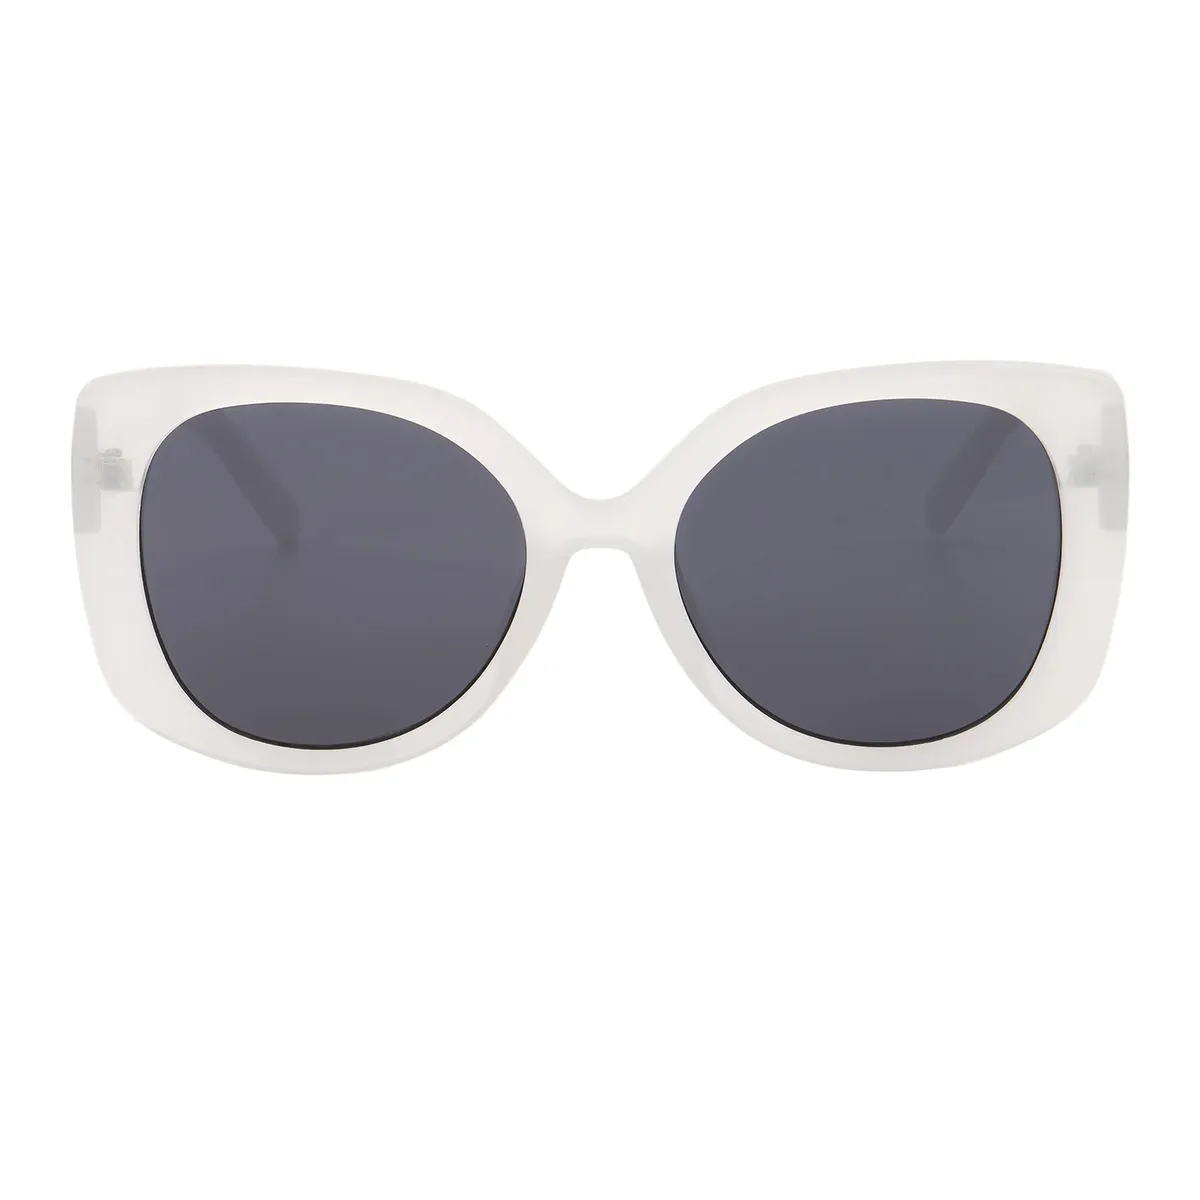 Gaki - Square White Sunglasses for Women